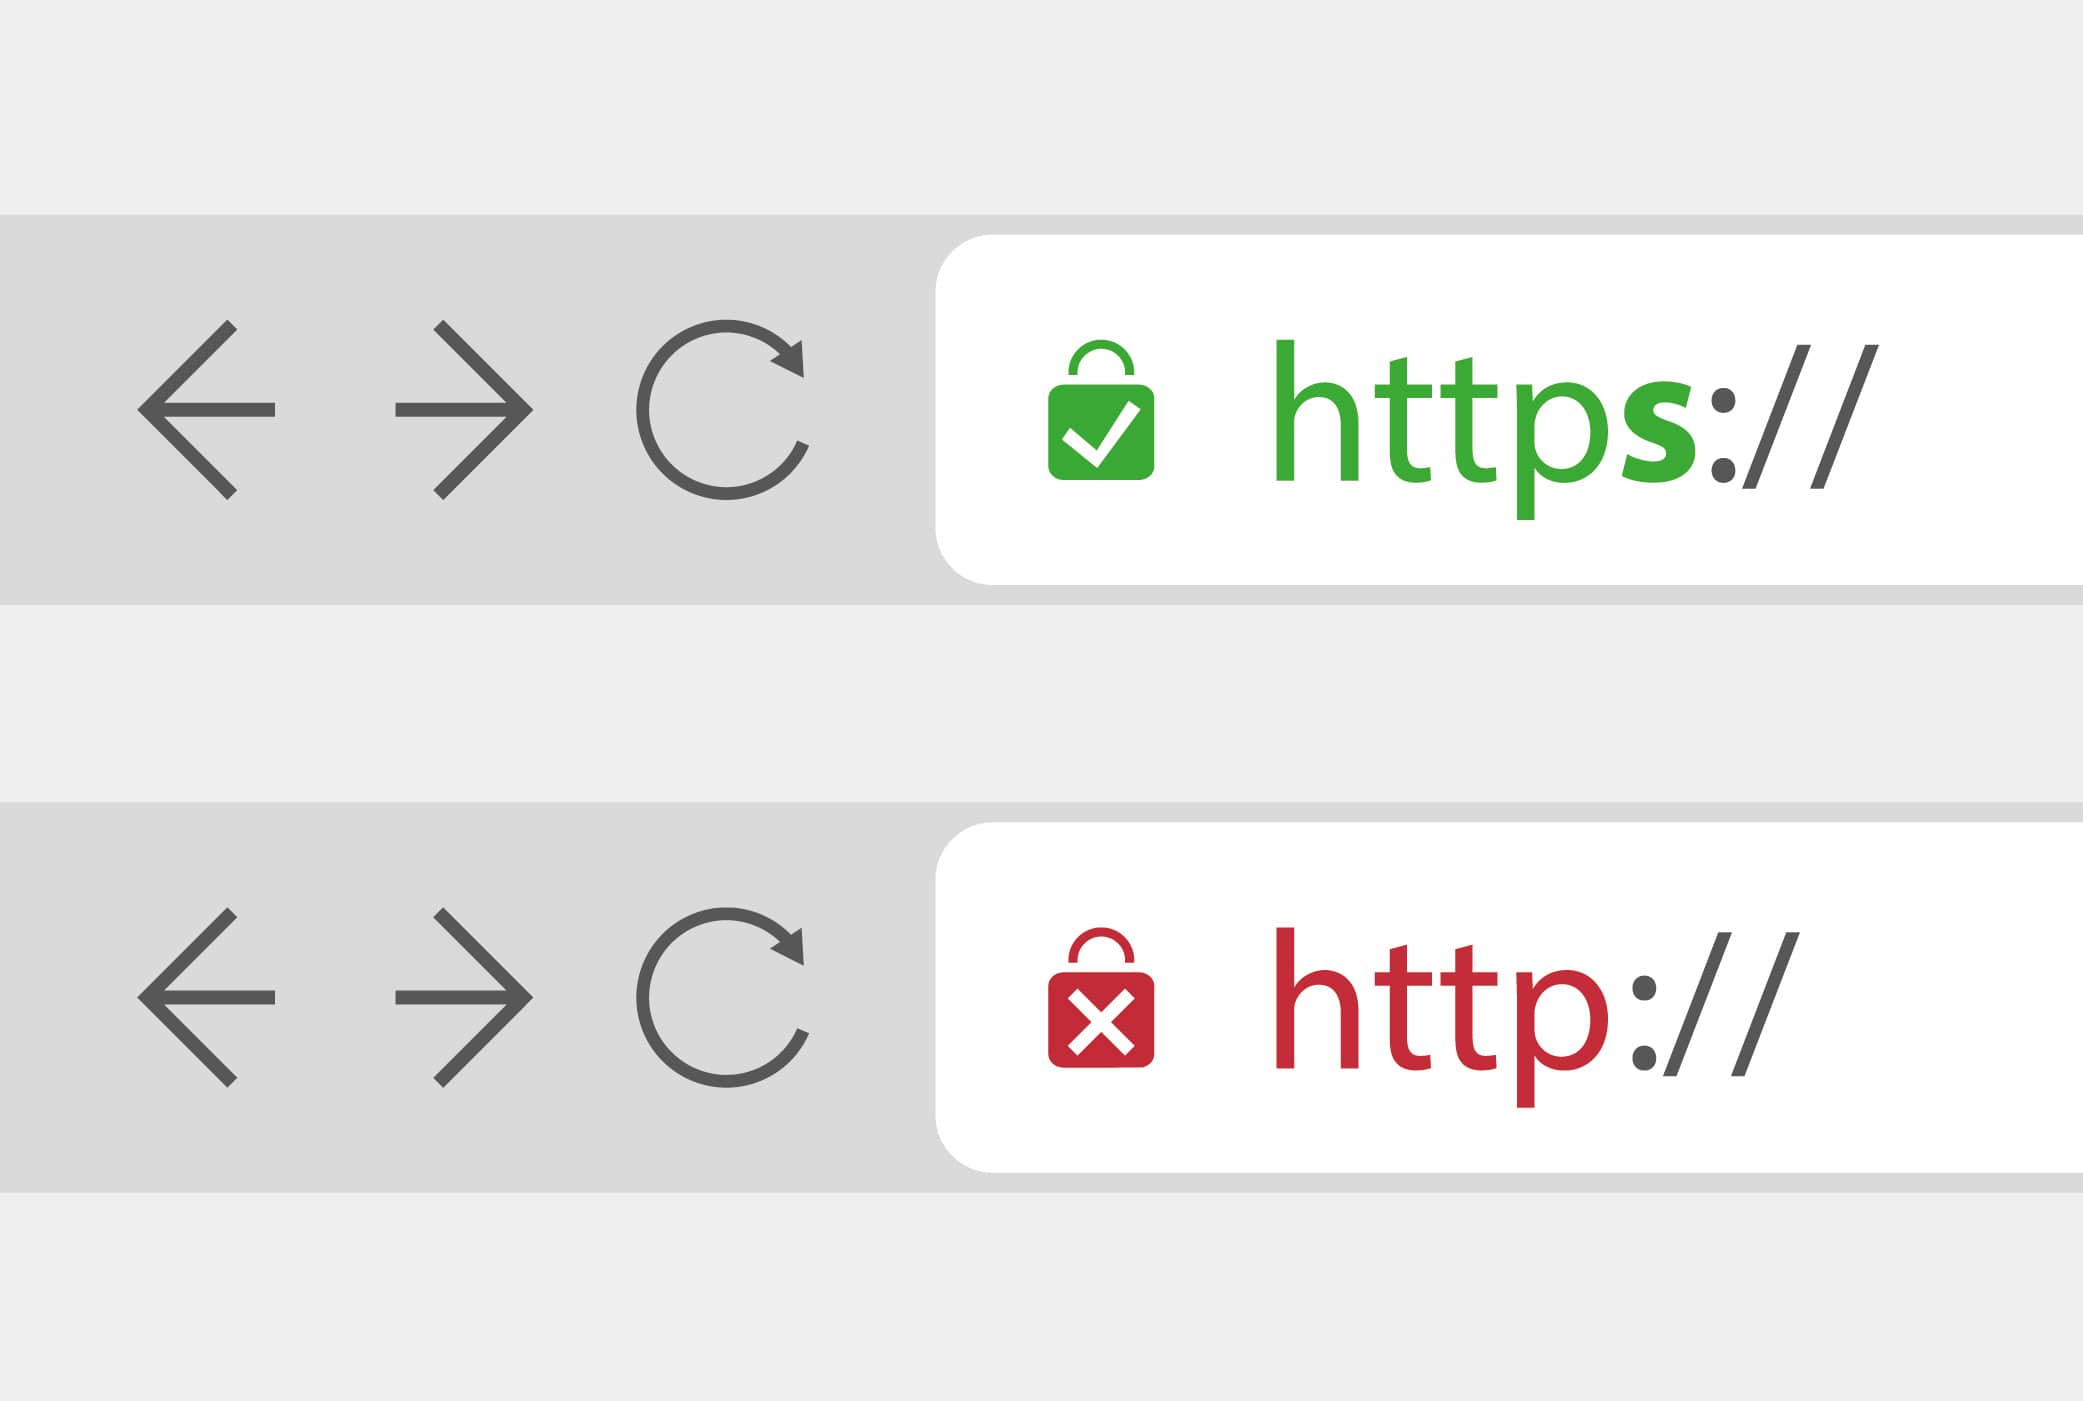   HTTP  HTTPS